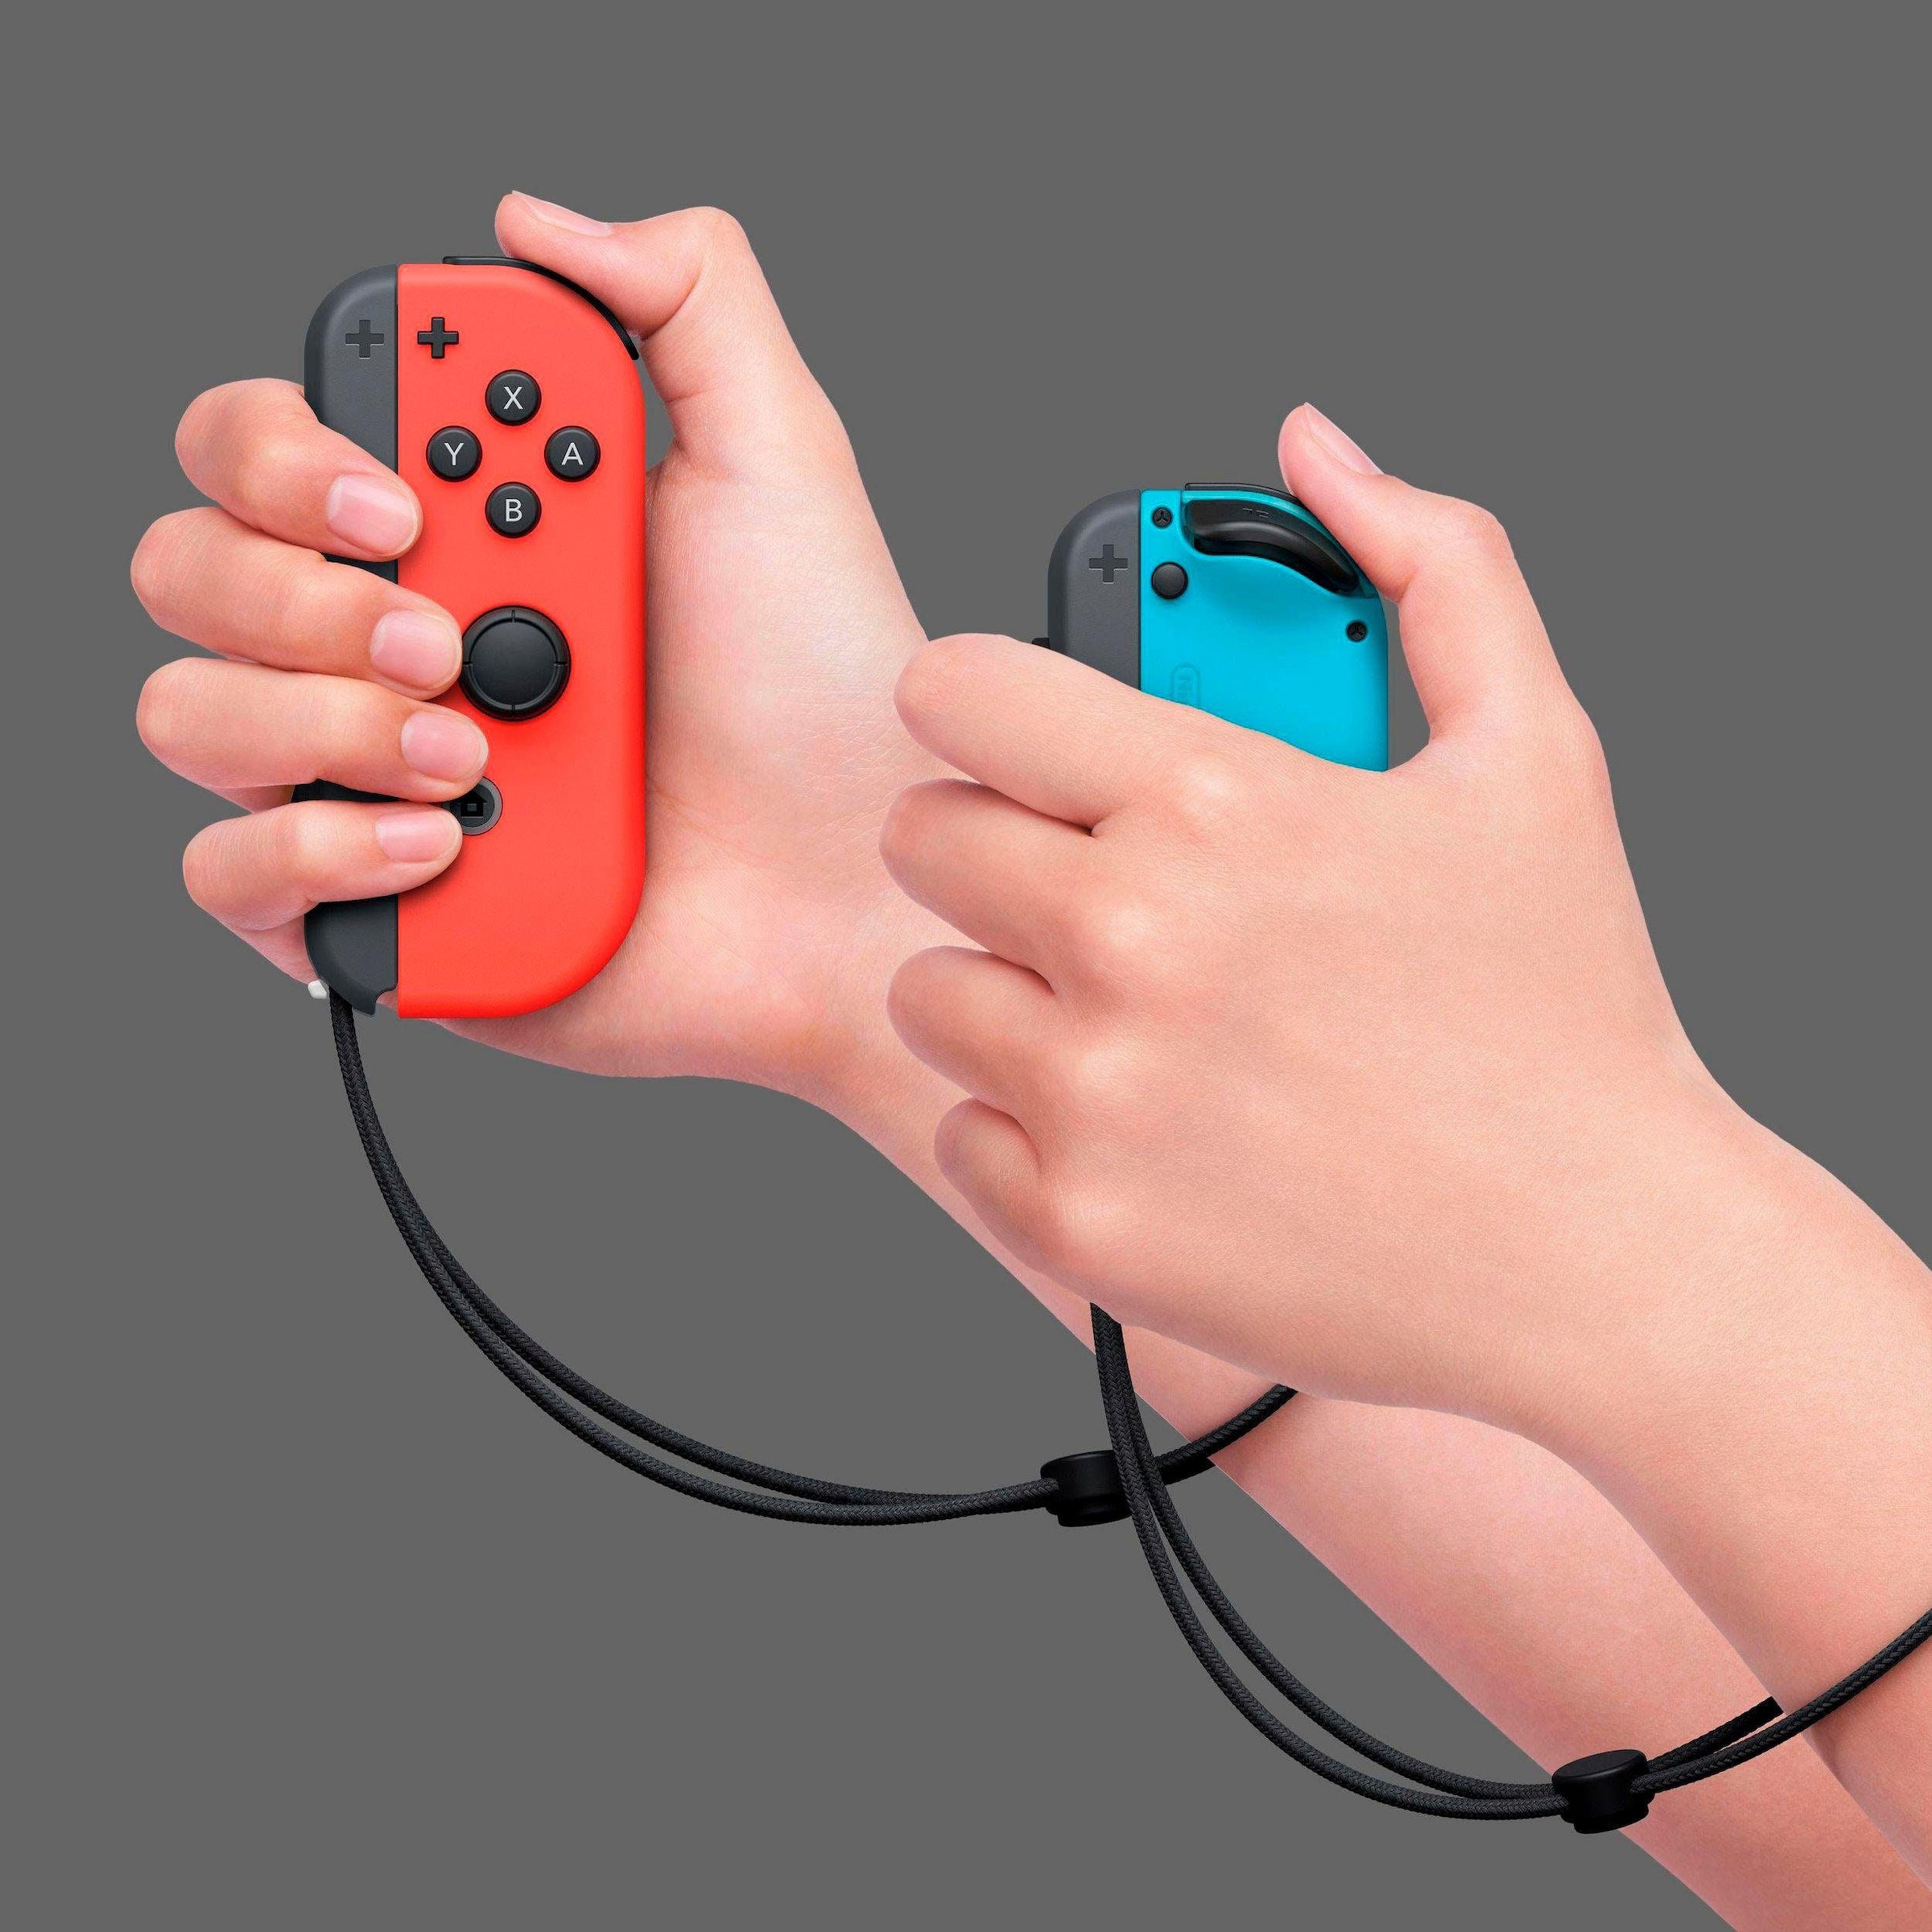 Nintendo Switch Konsolen-Set, inkl. Ring Fit Adventure